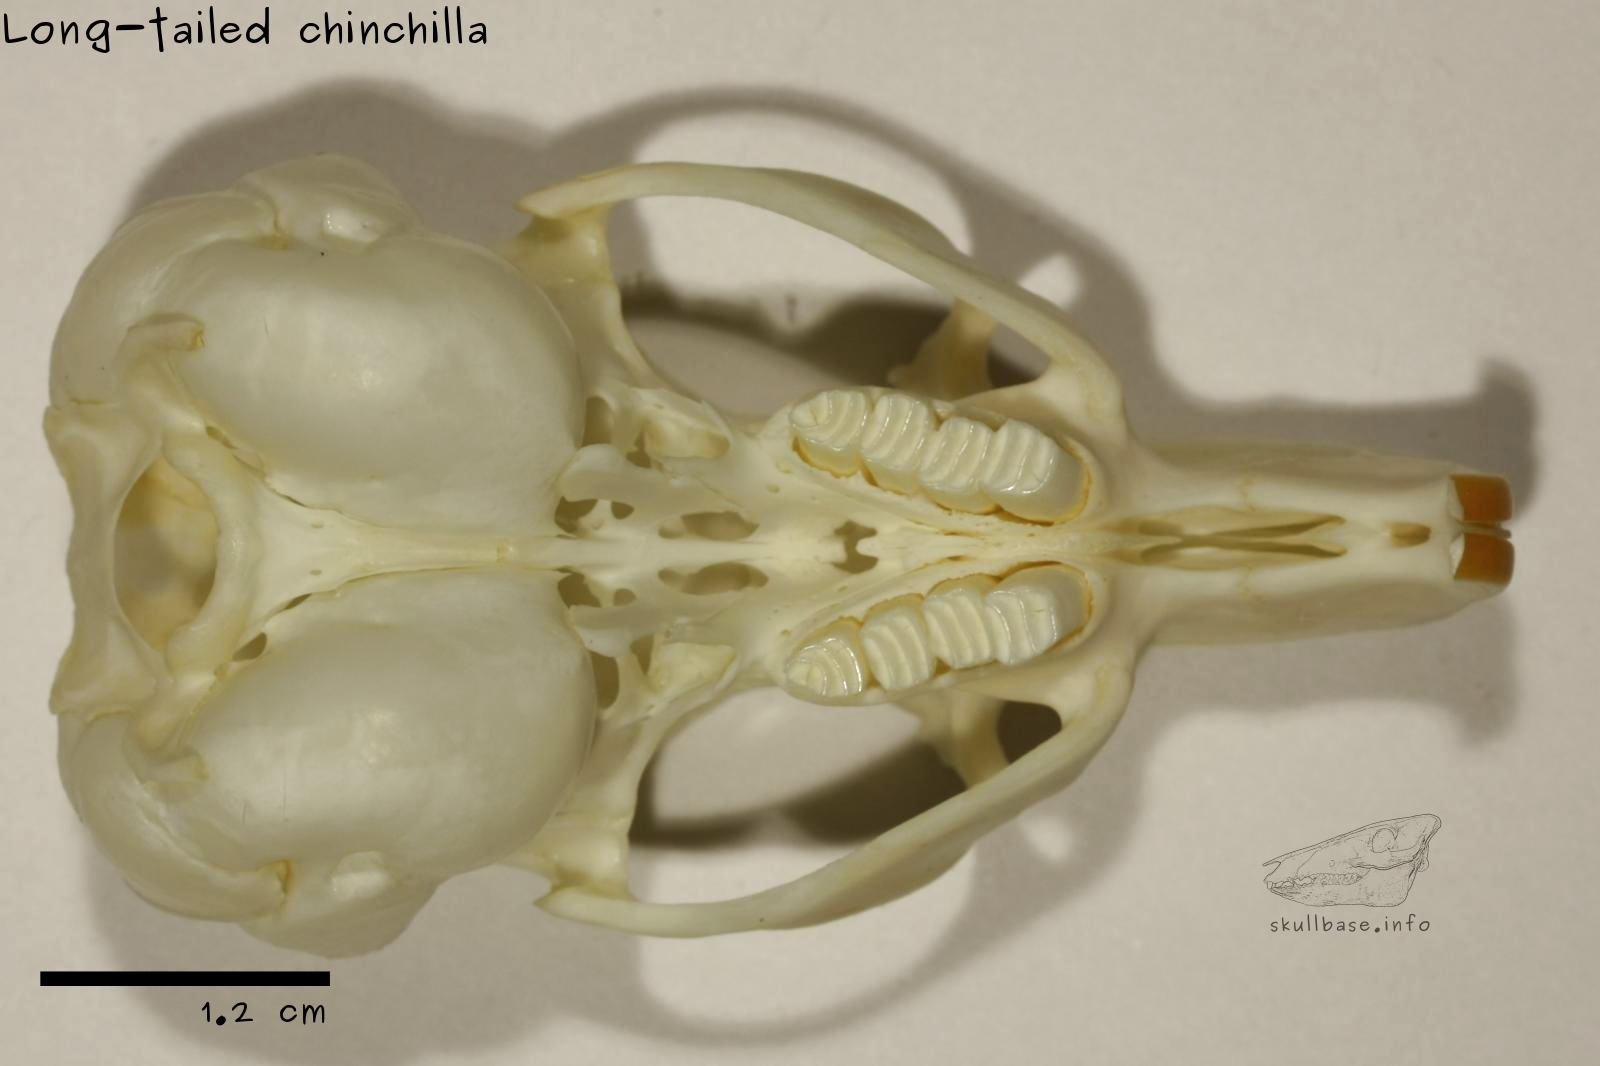 Long-tailed chinchilla (Chinchilla lanigera) skull ventral view